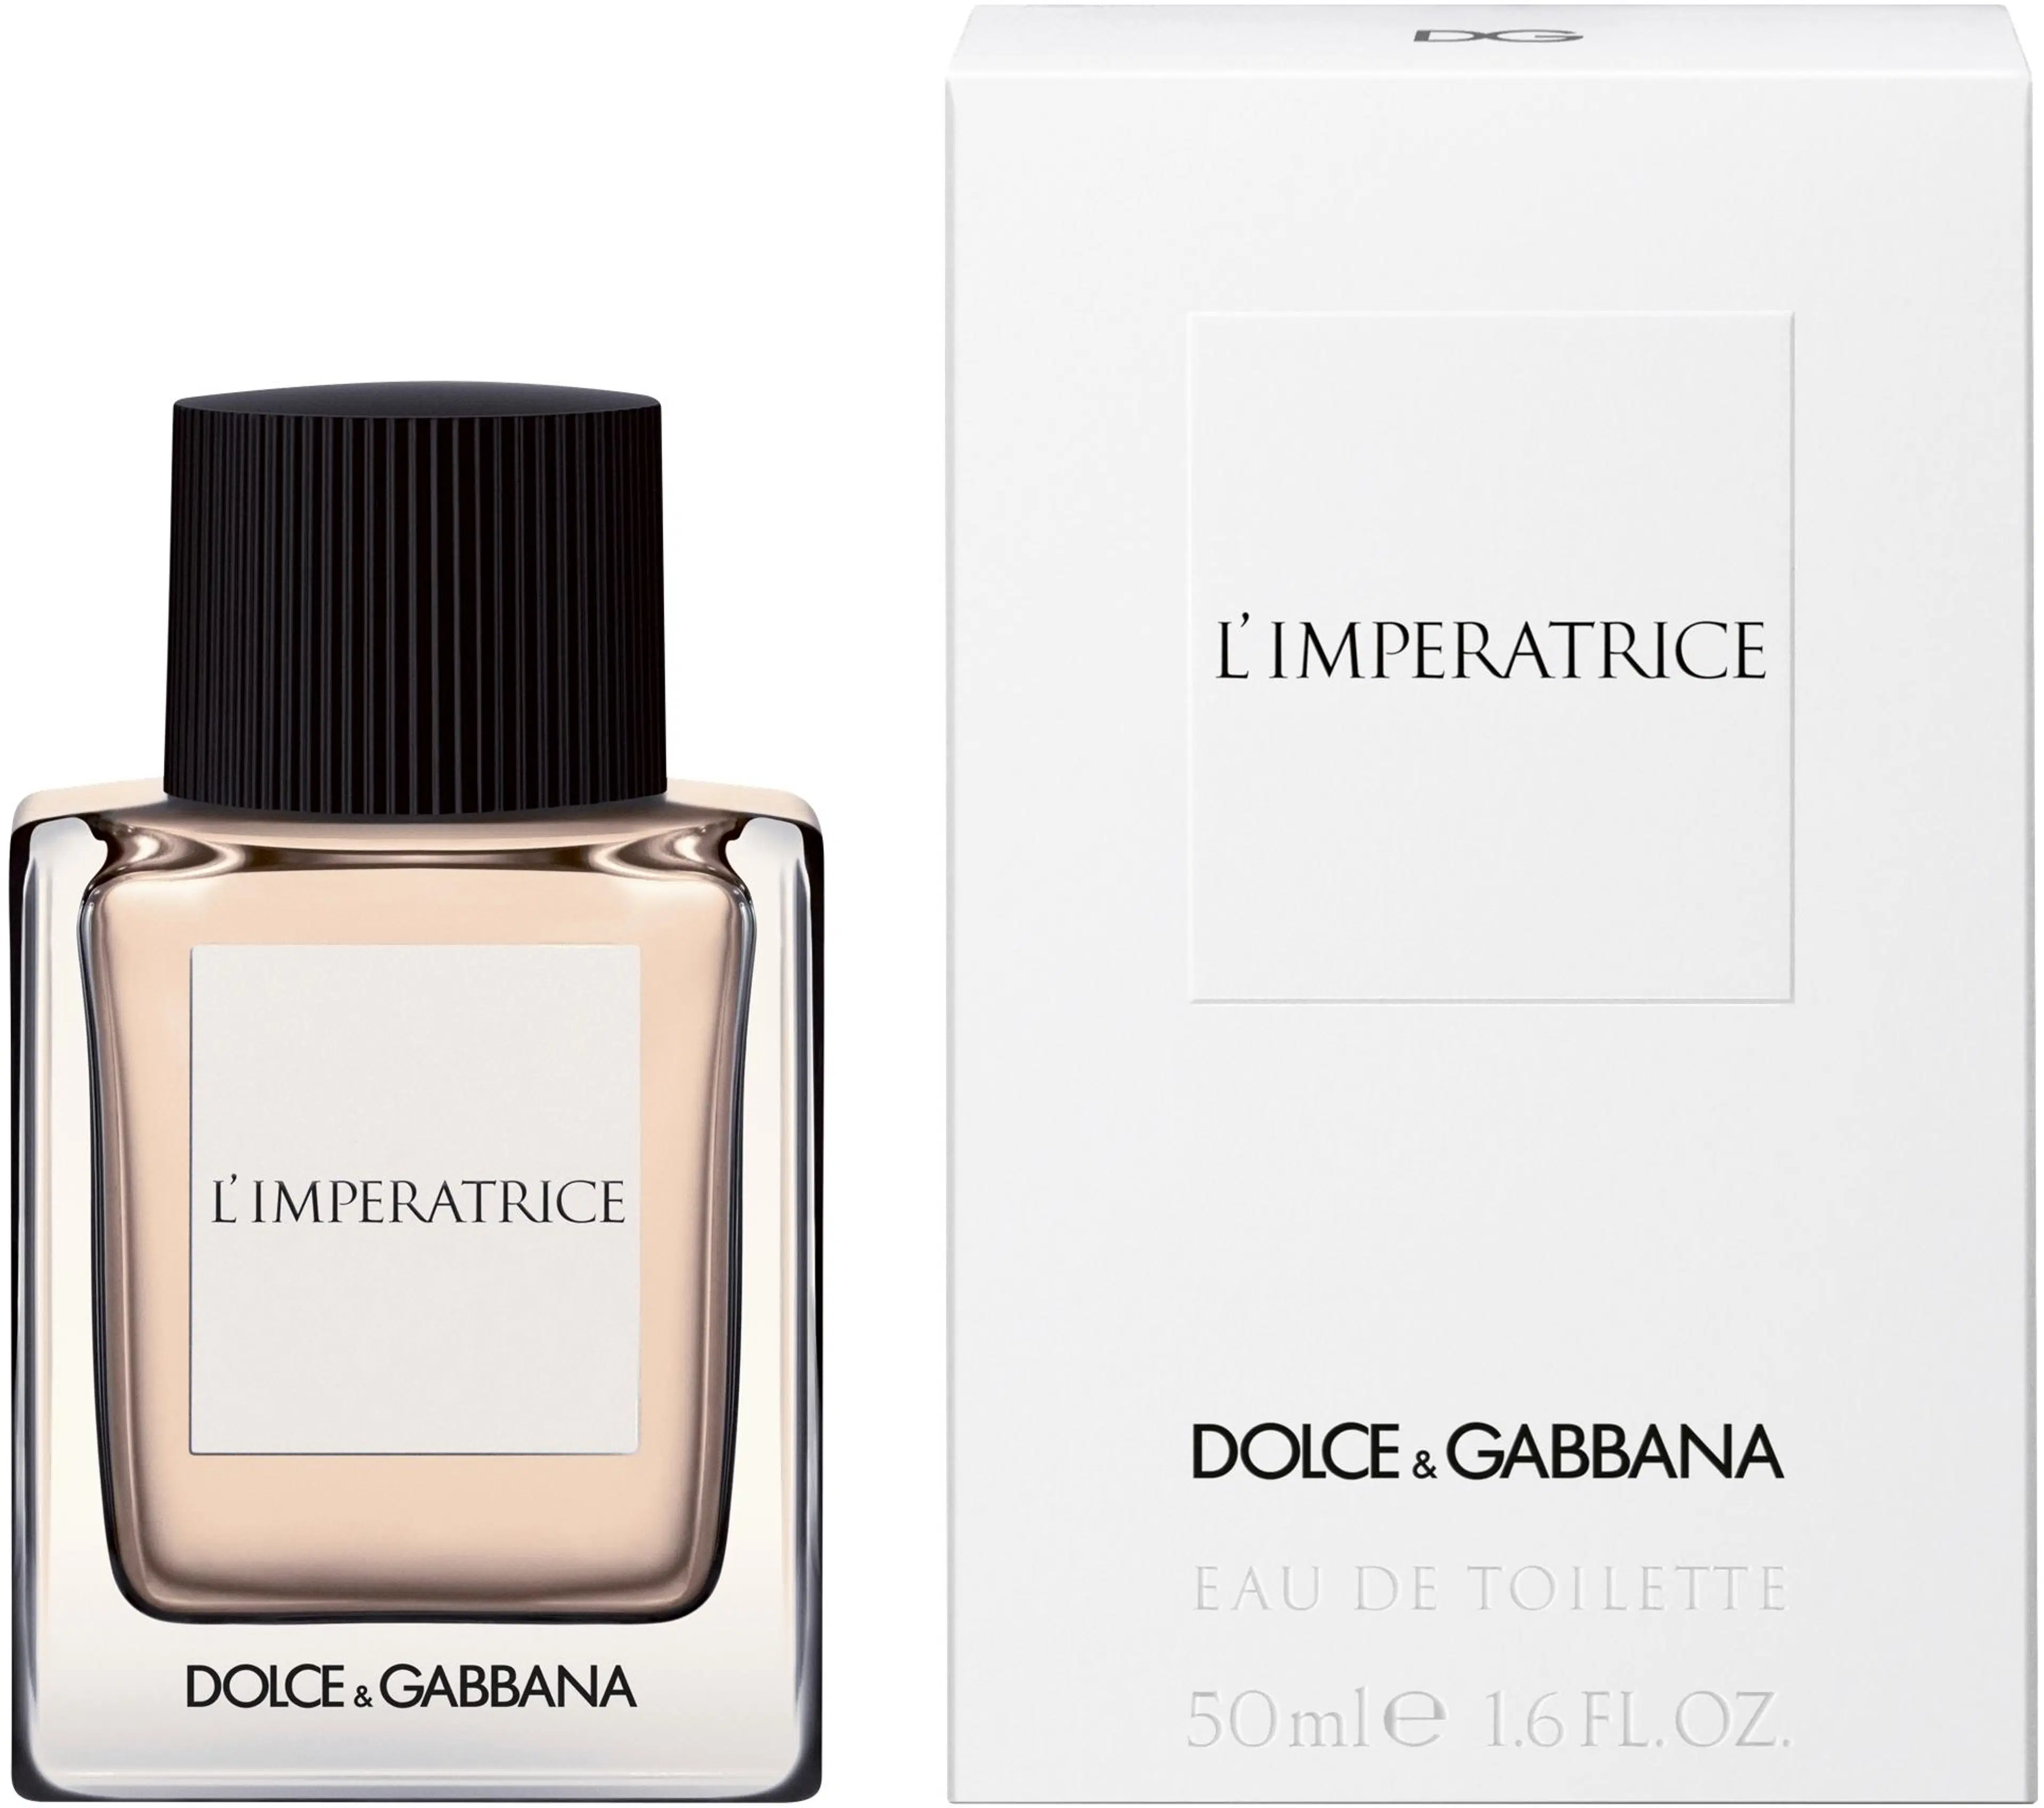 DOLCE & GABBANA 3 L'IMPERATRICE EdT tuoksu 50 ml